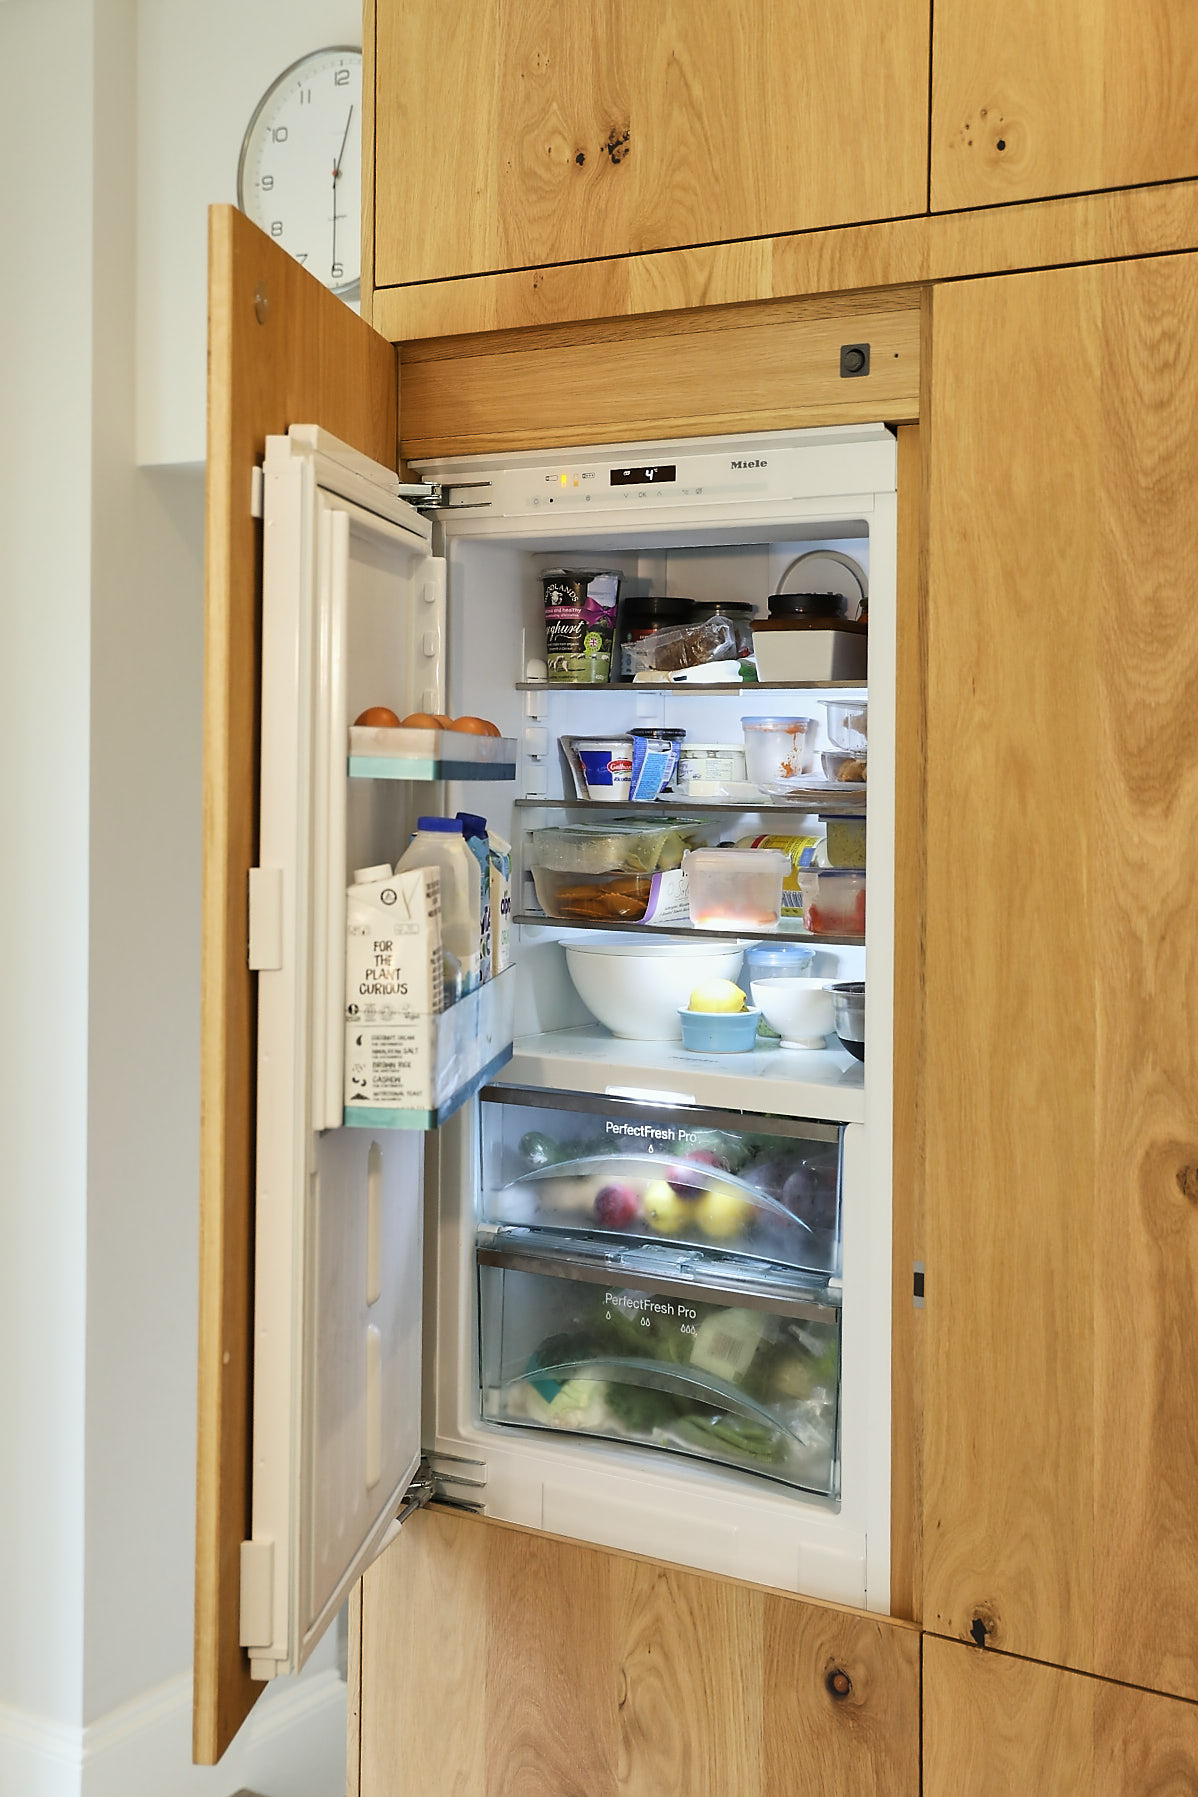 Integrated Miele fridge in oak cabinets